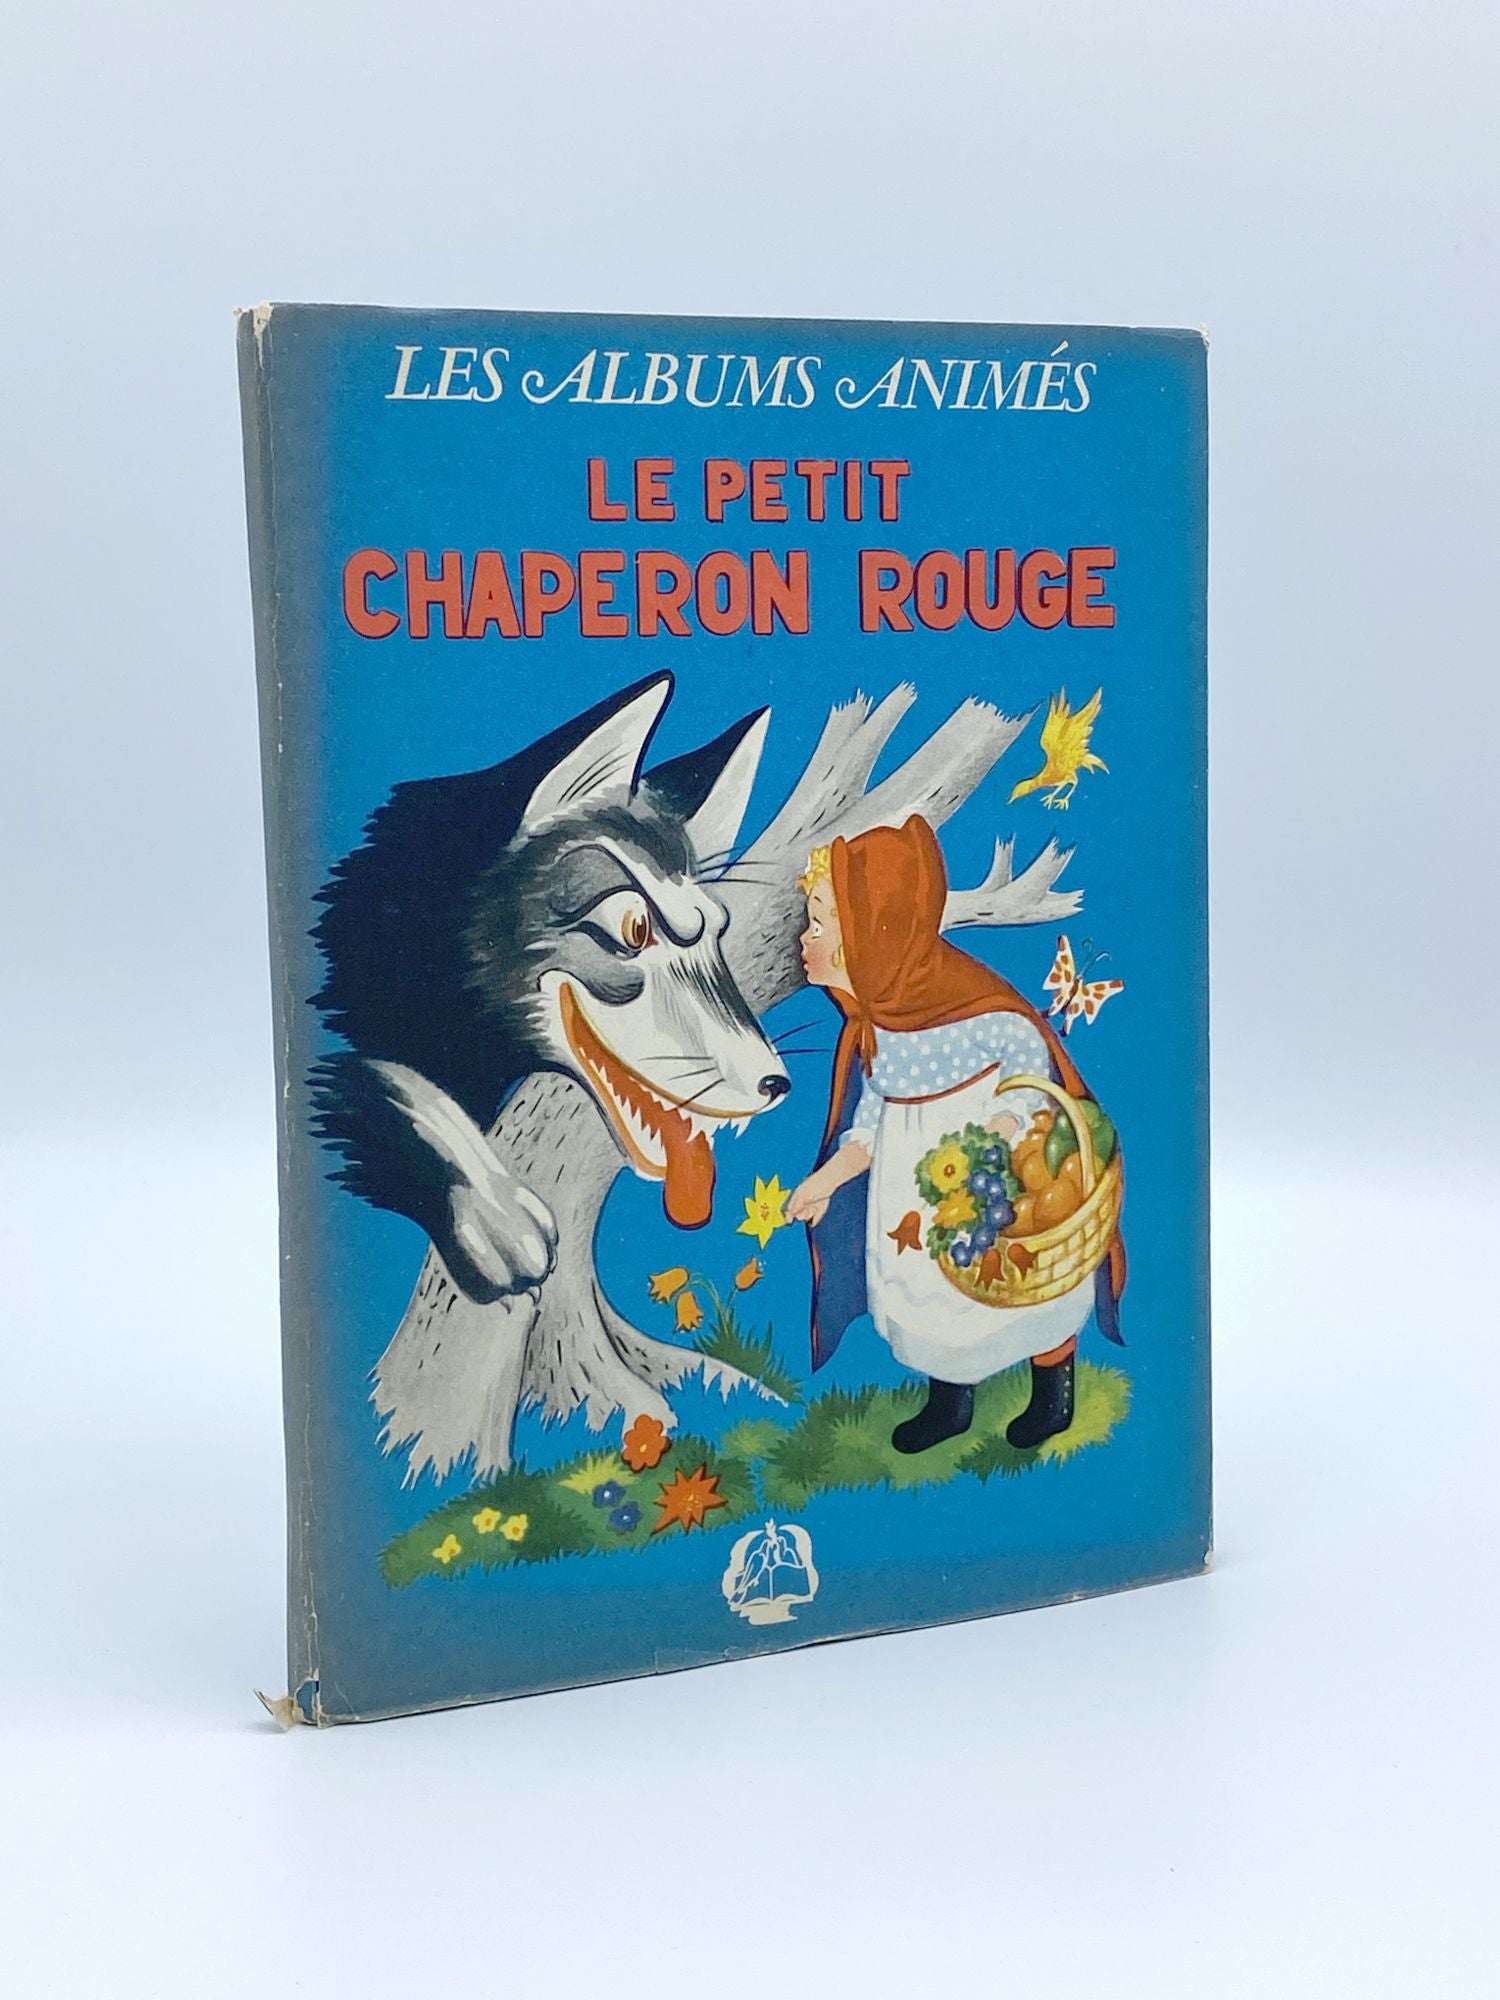 Le Petit Chaperon Rouge by Julian WEHR